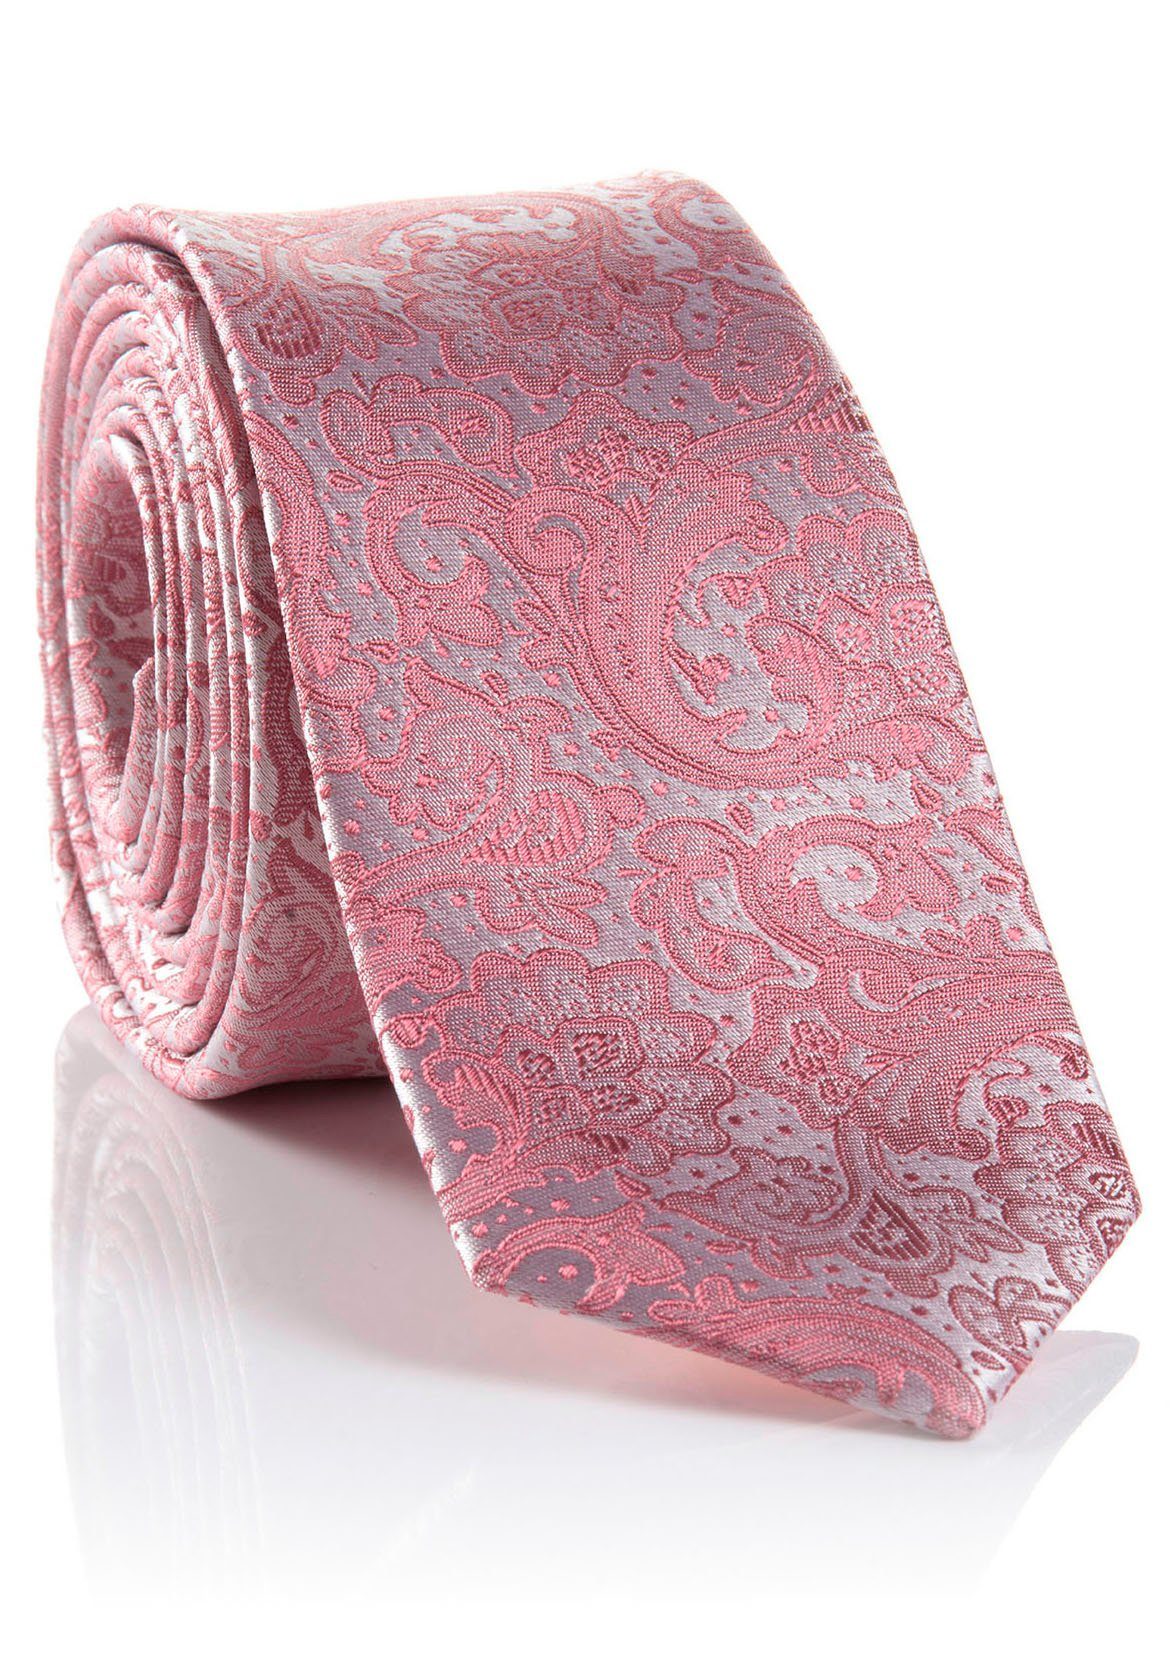 MONTI Krawatte Paisley-Muster Seide, red reiner aus LELIO Krawatte bright